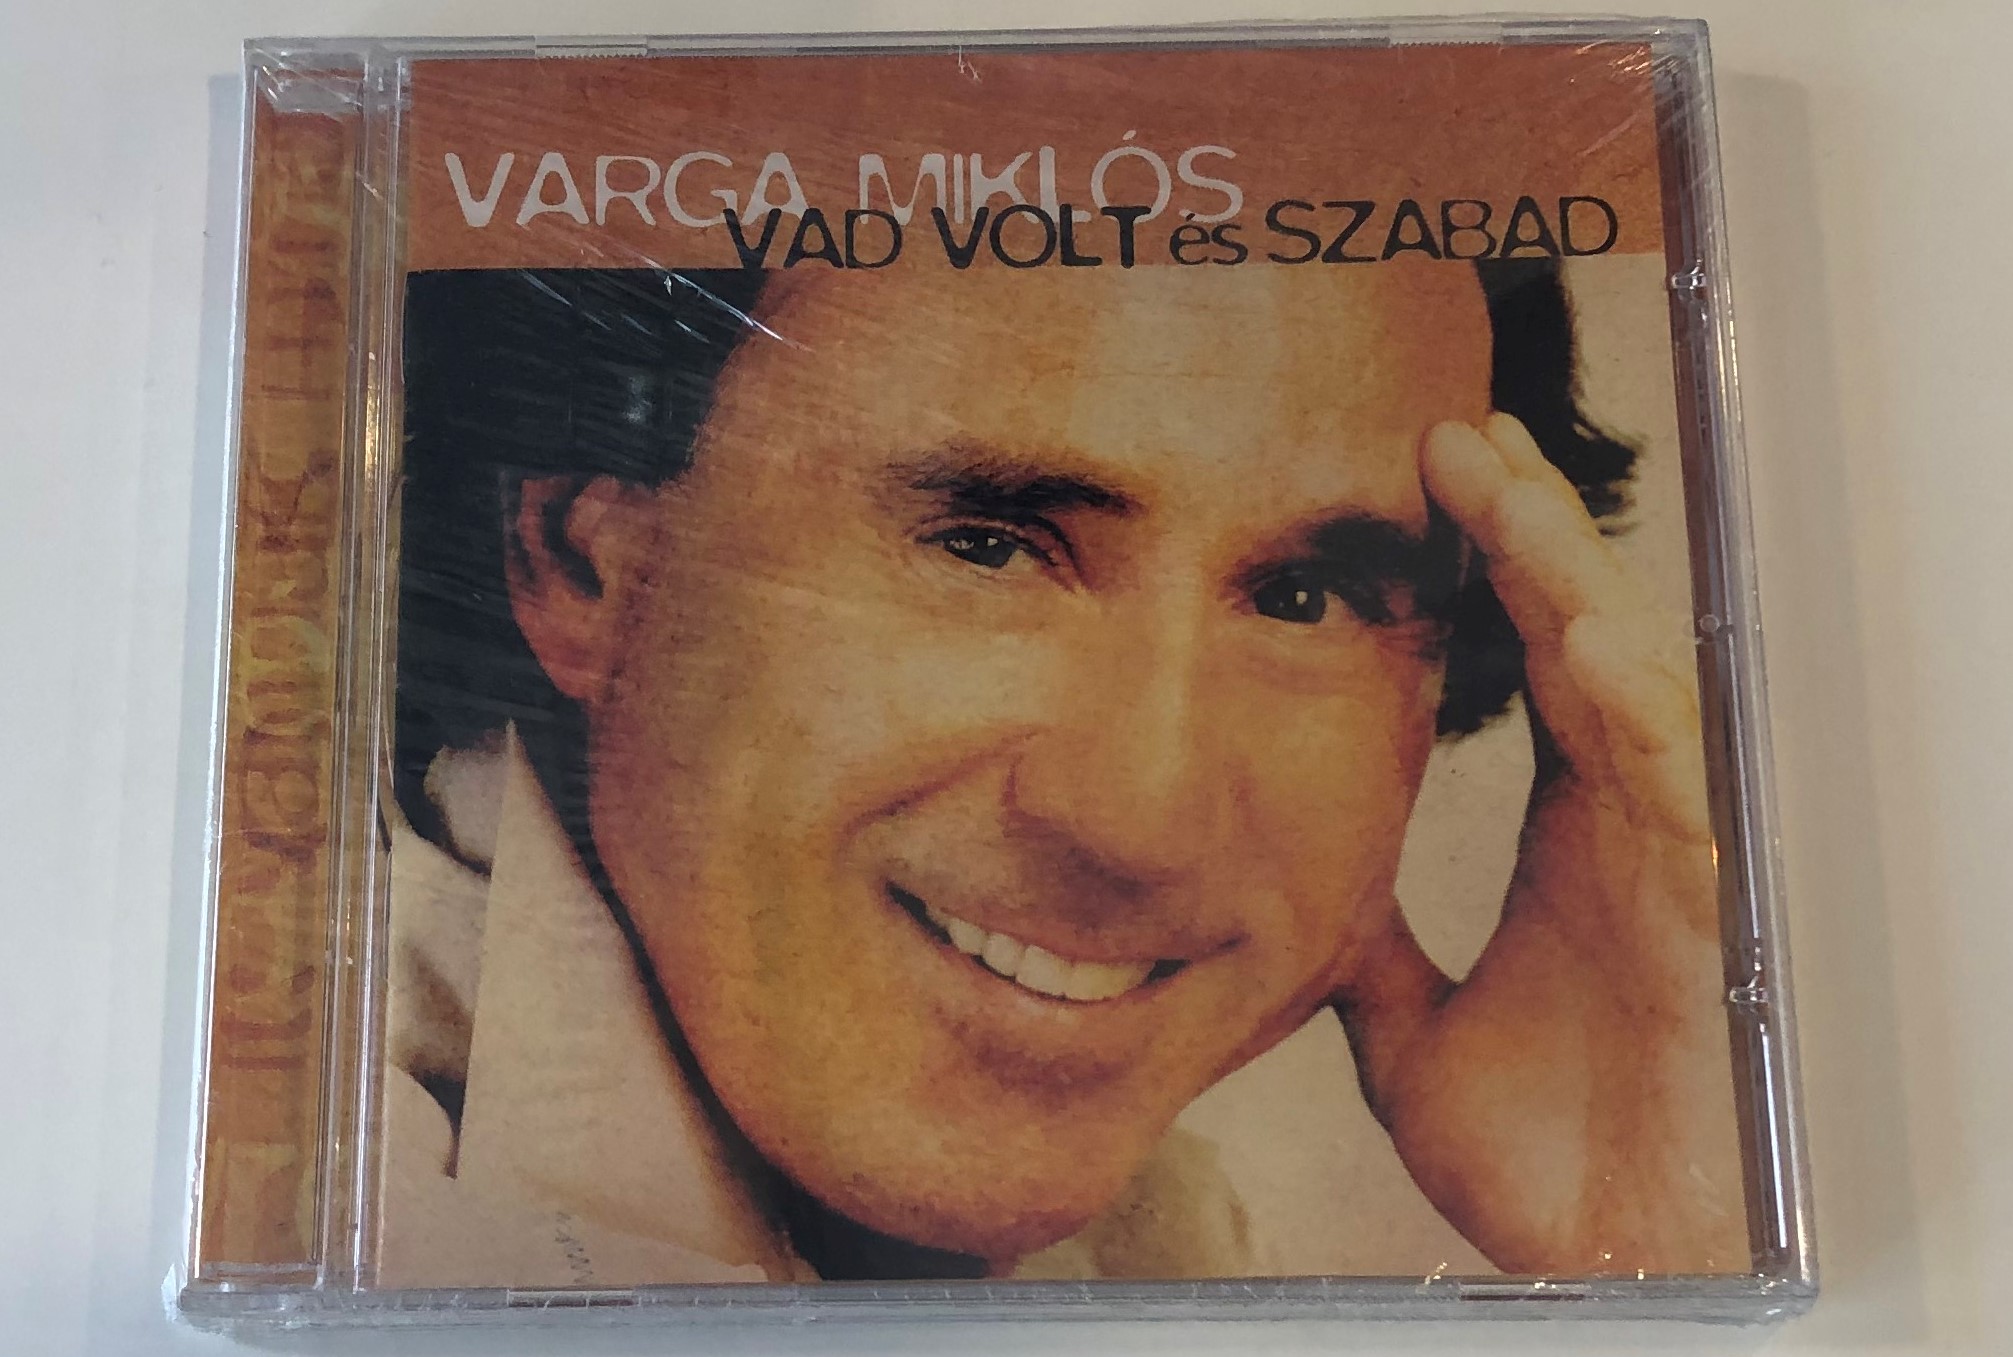 varga-mikl-s-vad-volt-s-szabad-private-moon-records-audio-cd-373730-2-1-.jpg